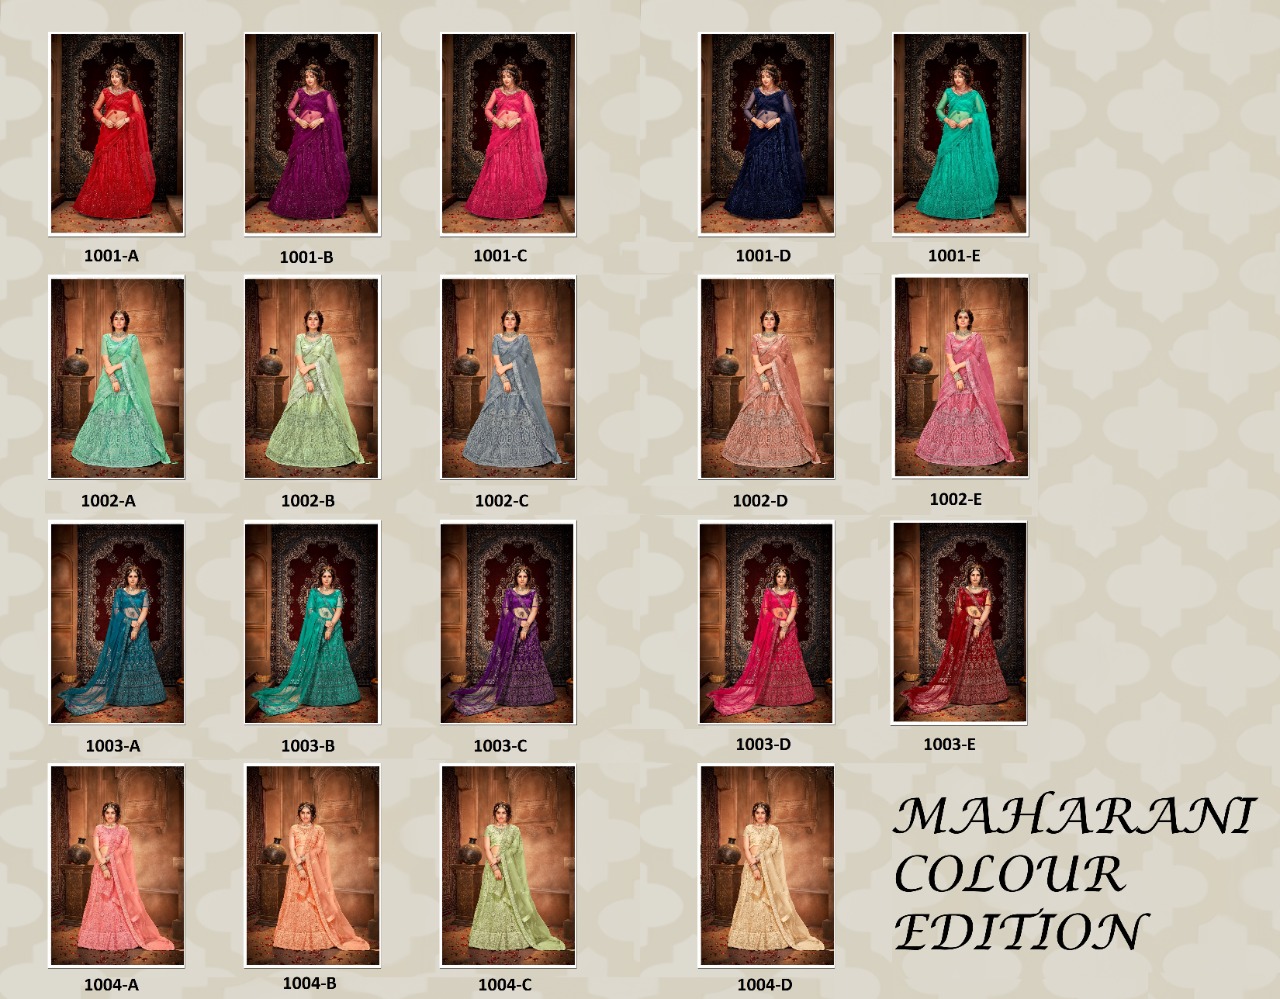 Mrudangi Maharani Colors Edition 1001-1004 Colors